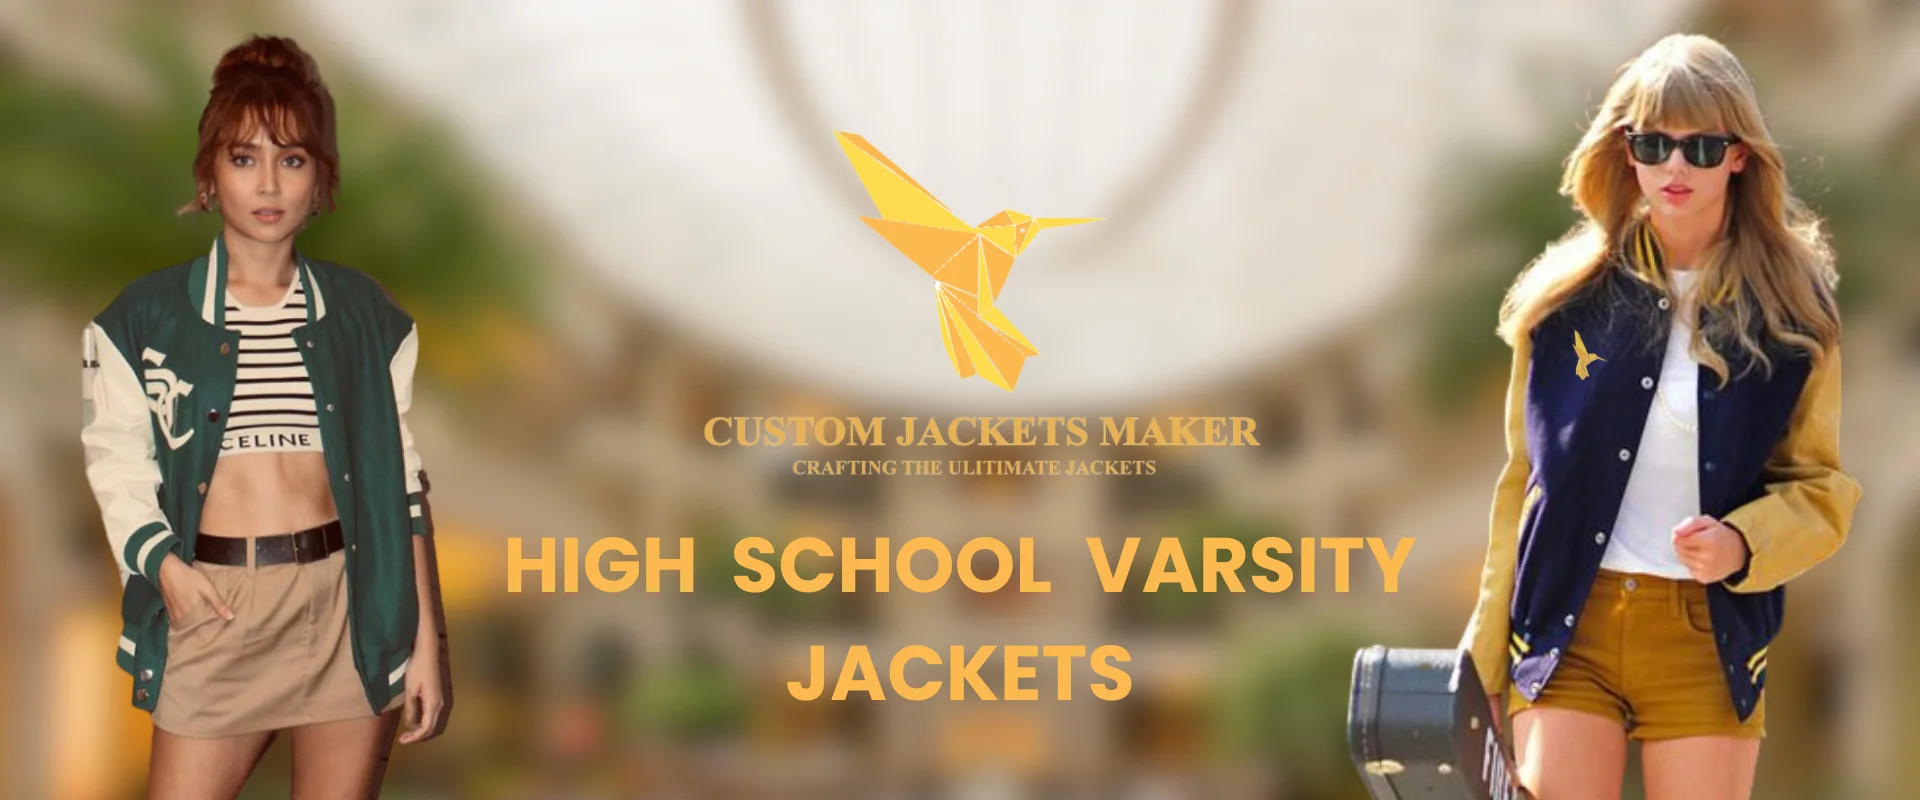 Banner Image of High School Varsity Jackets